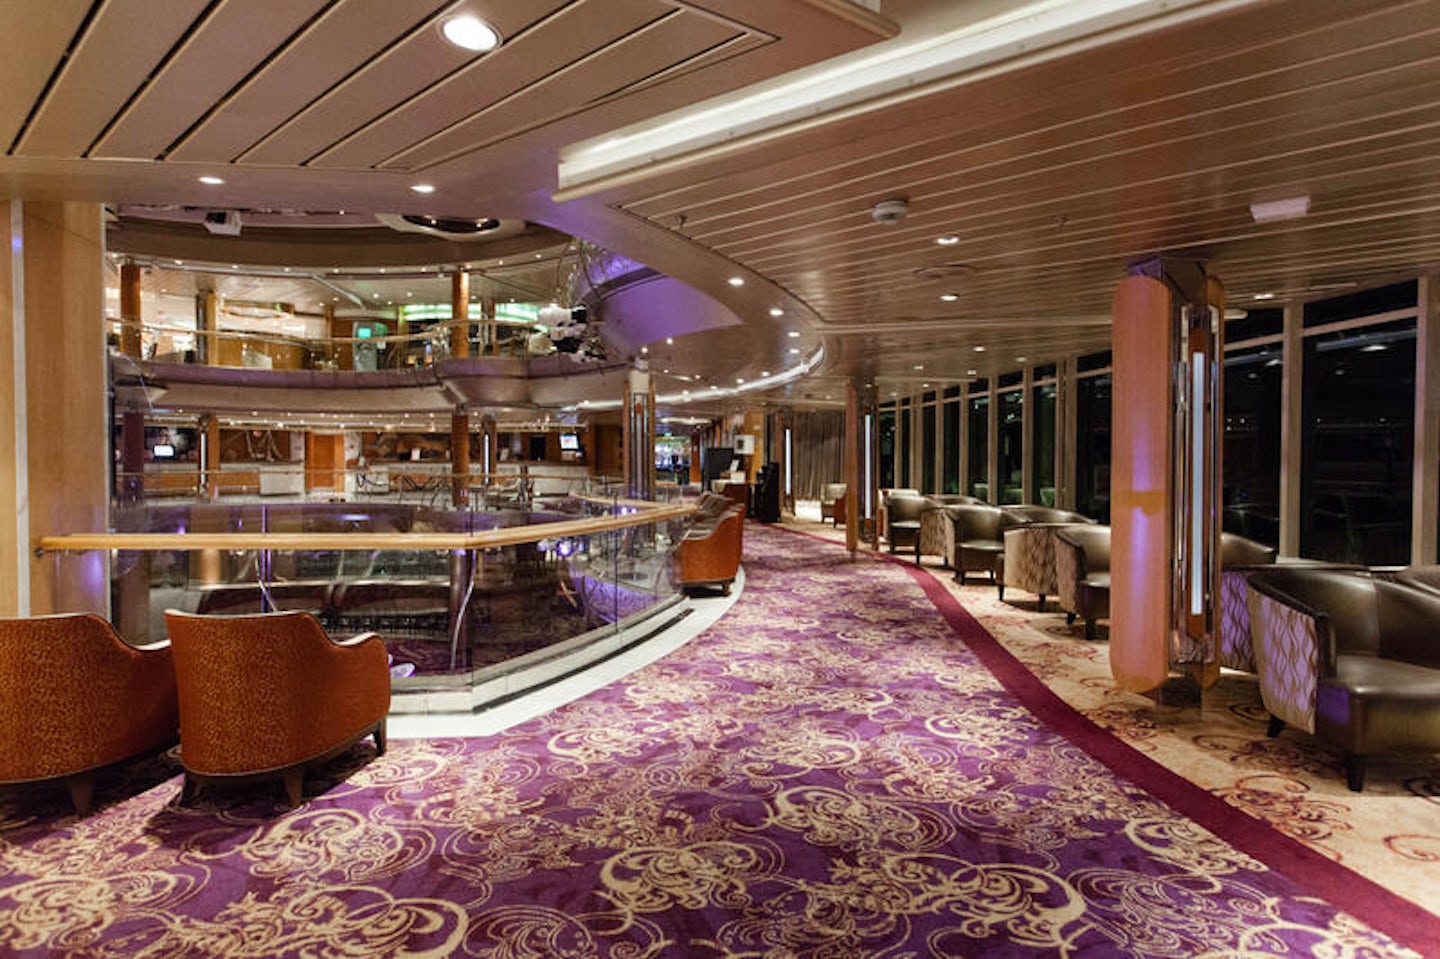 Centrum on Royal Caribbean Grandeur of the Seas Cruise Ship - Cruise Critic